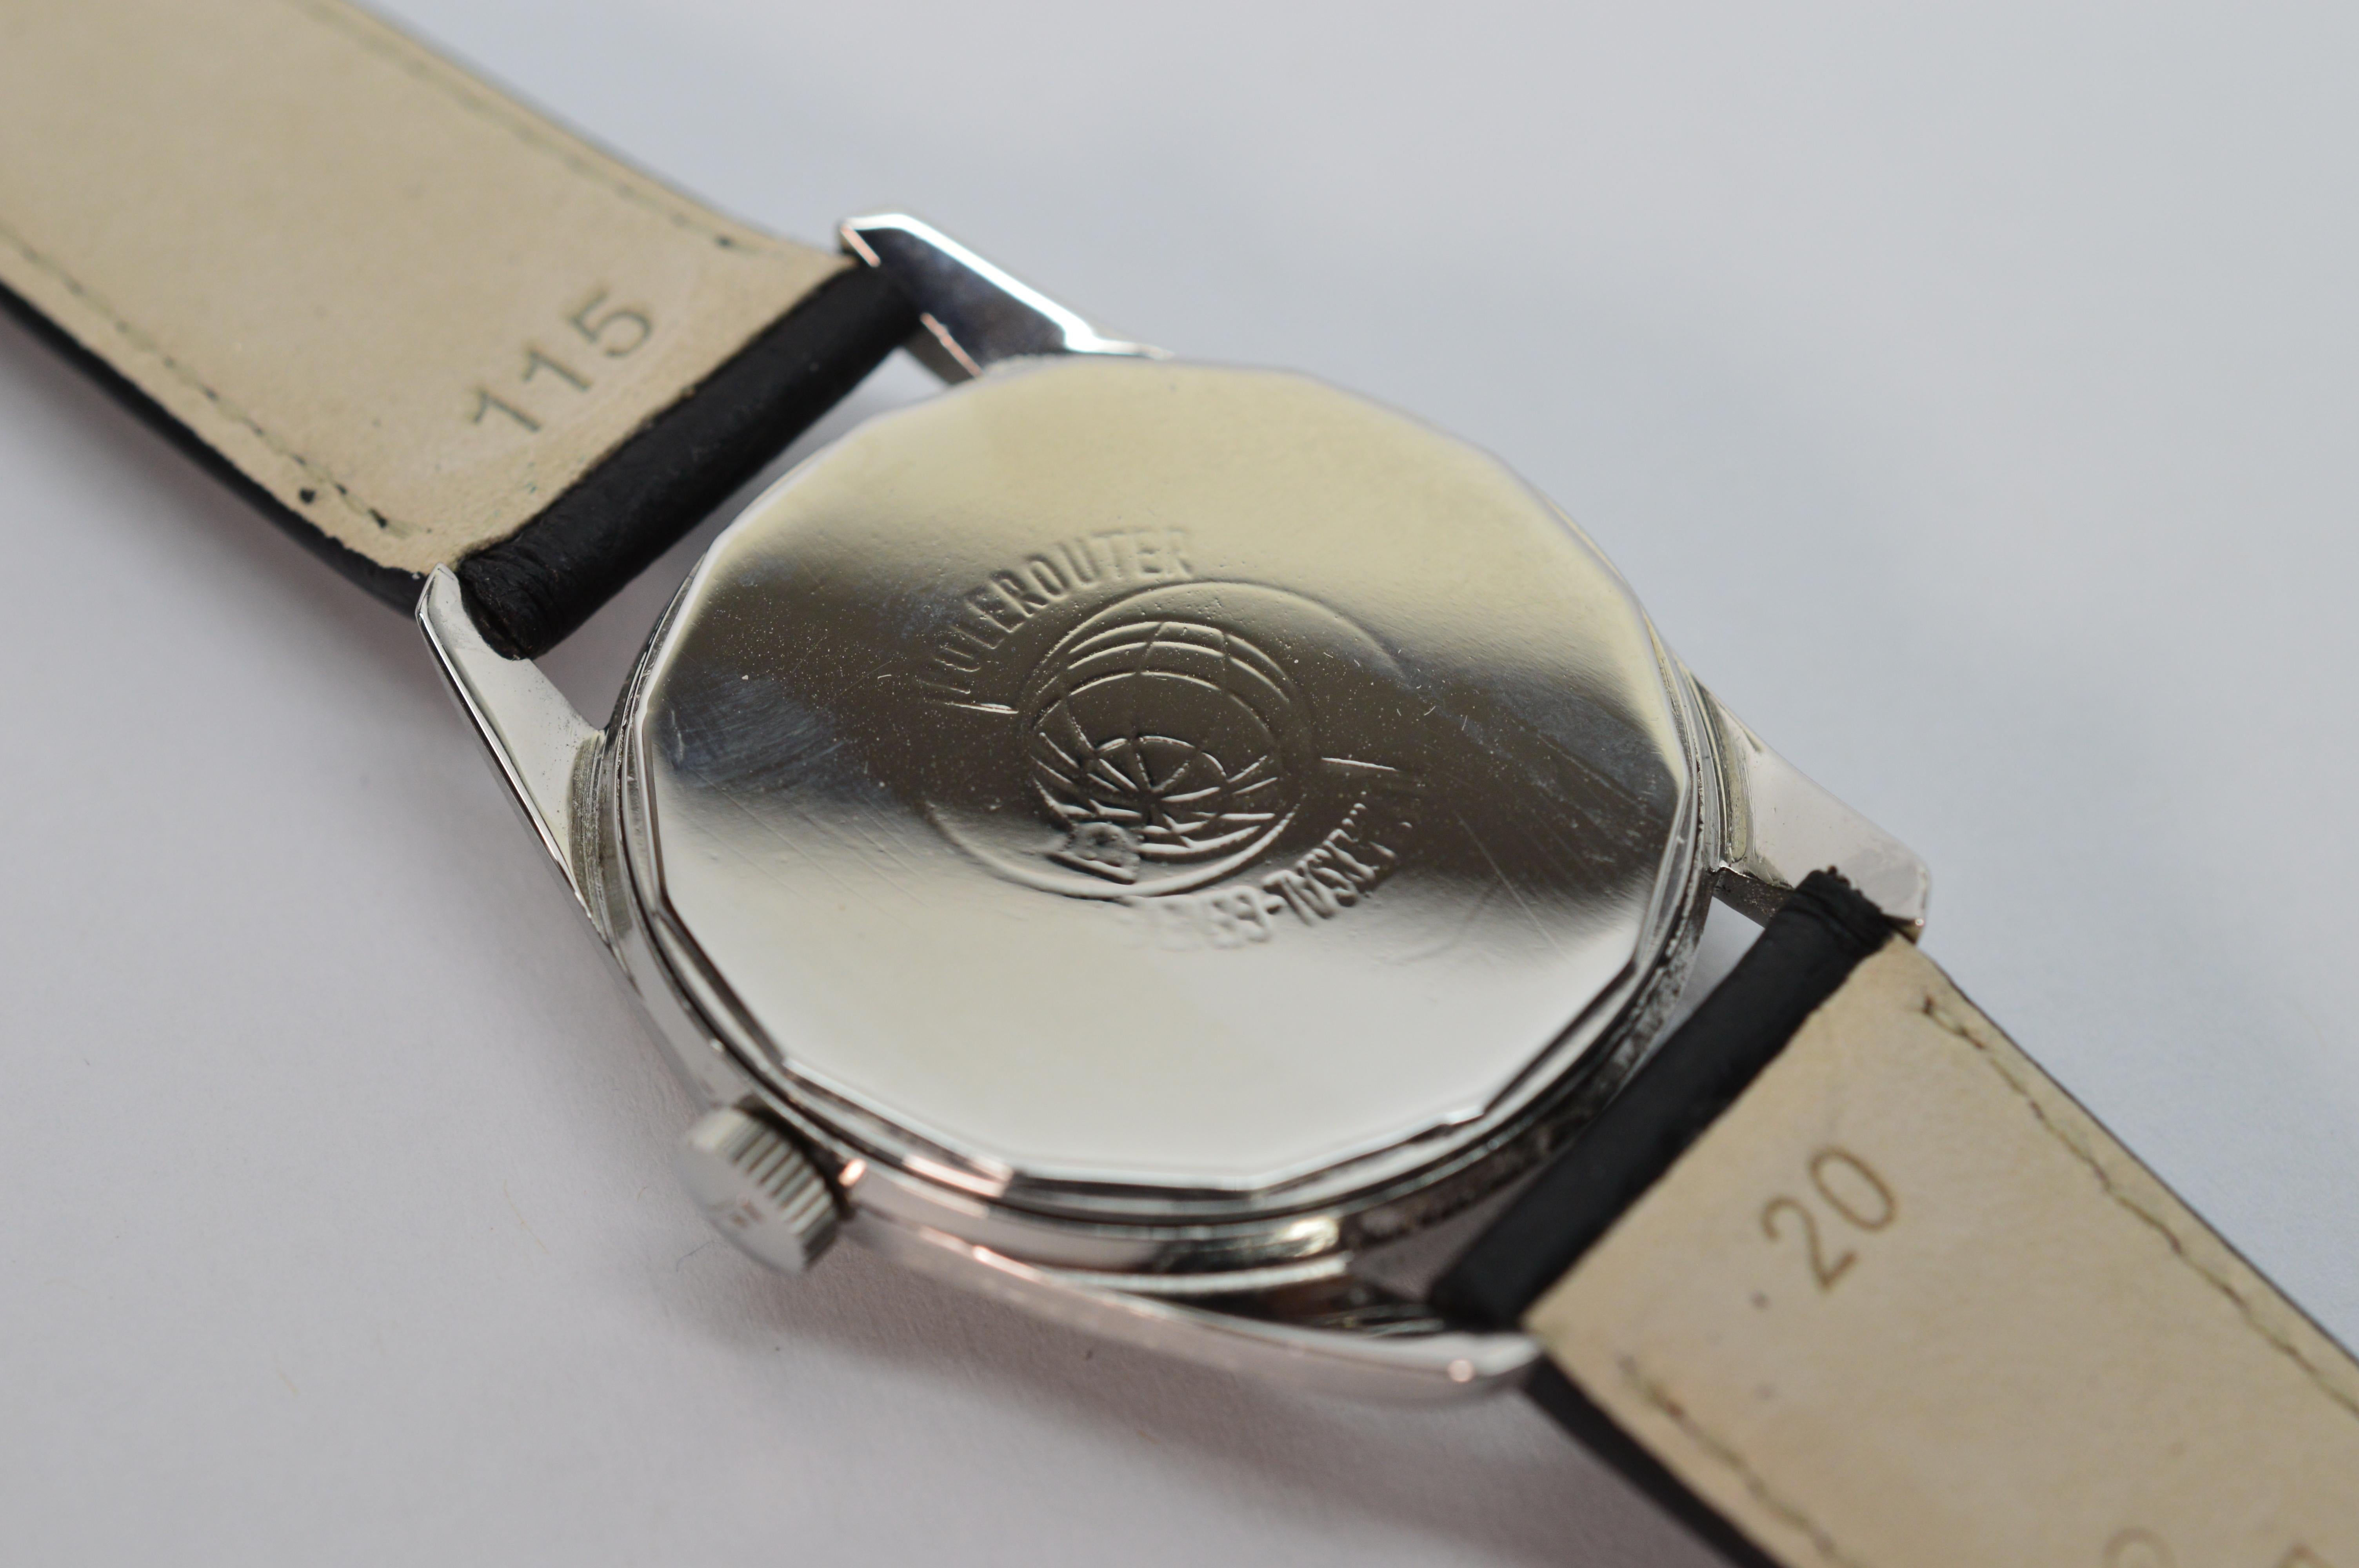 Universal Geneve Polerouter Automatic Steel Men's Wrist Watch 1